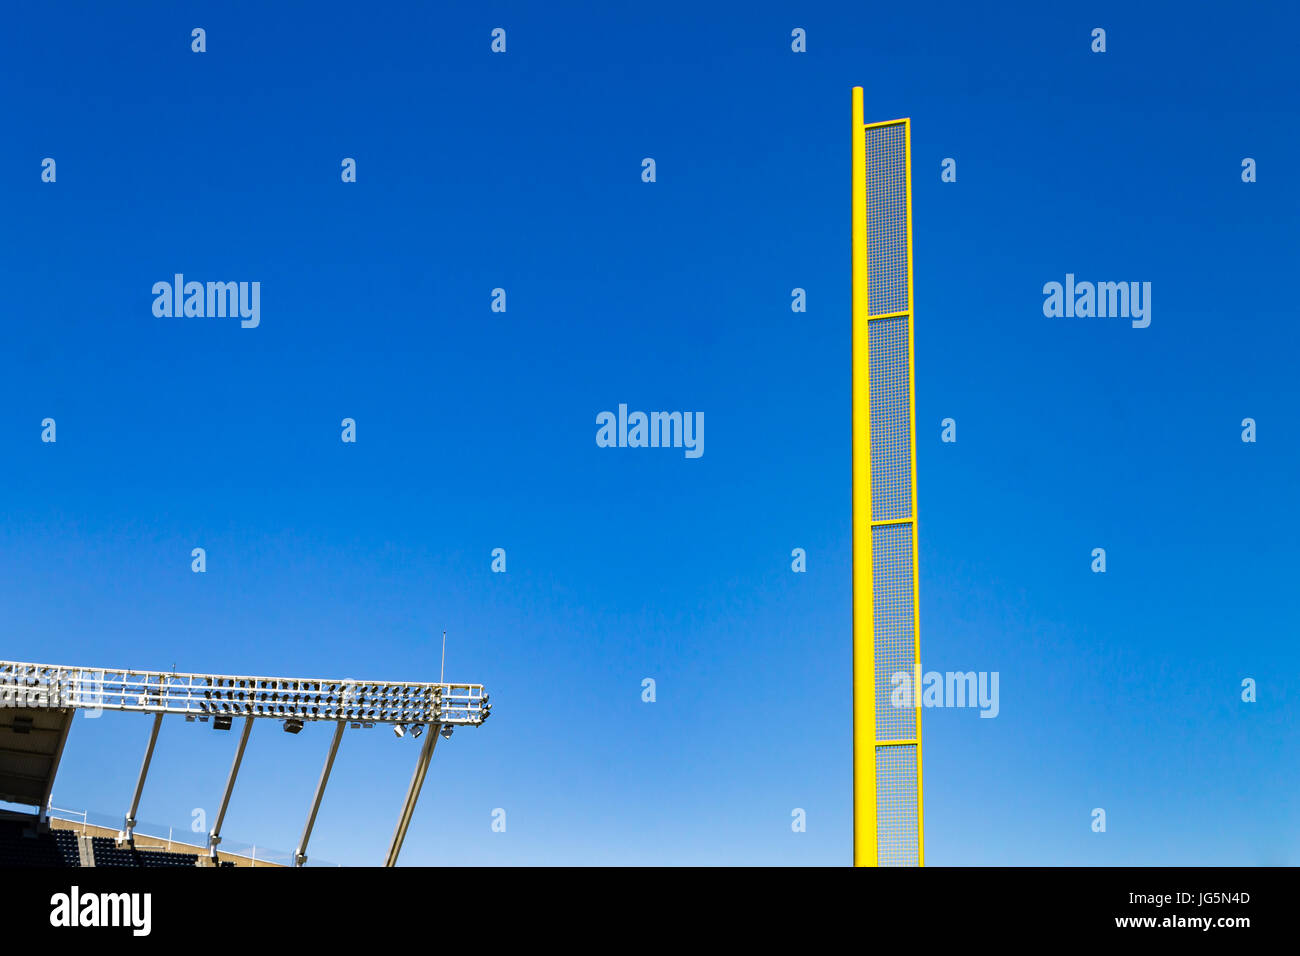 Baseball foulball pole at baseball stadium Stock Photo